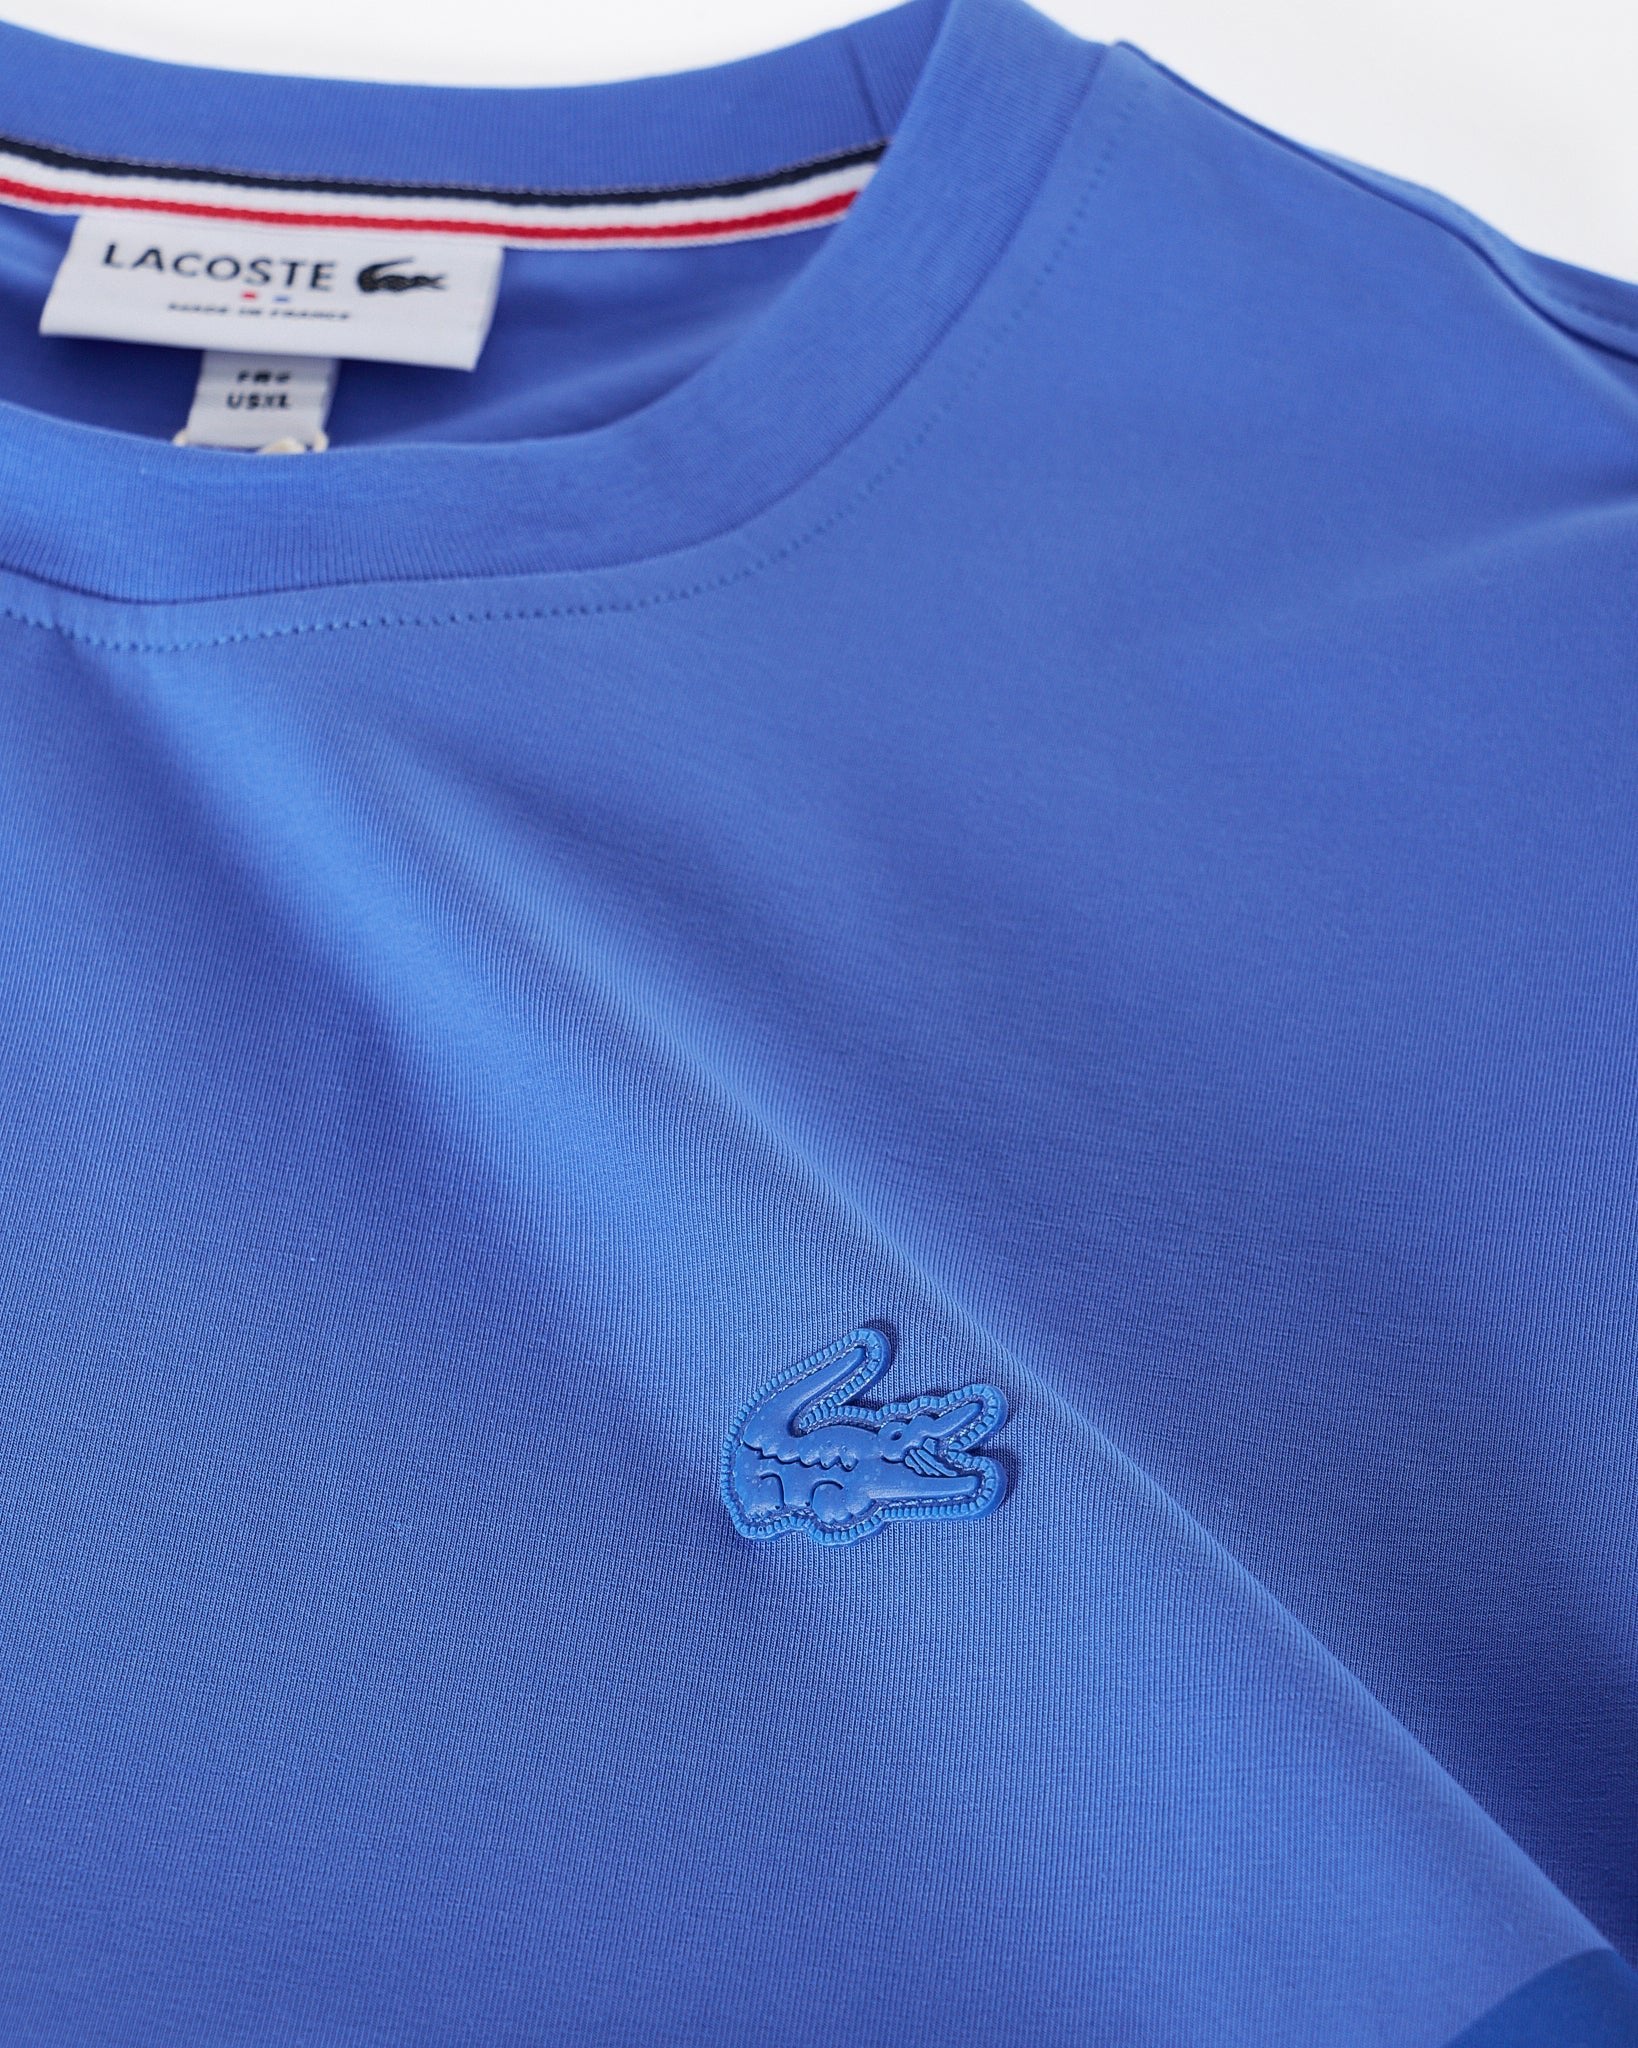 MOI OUTFIT-Alligator Men Blue T-Shirt 14.90